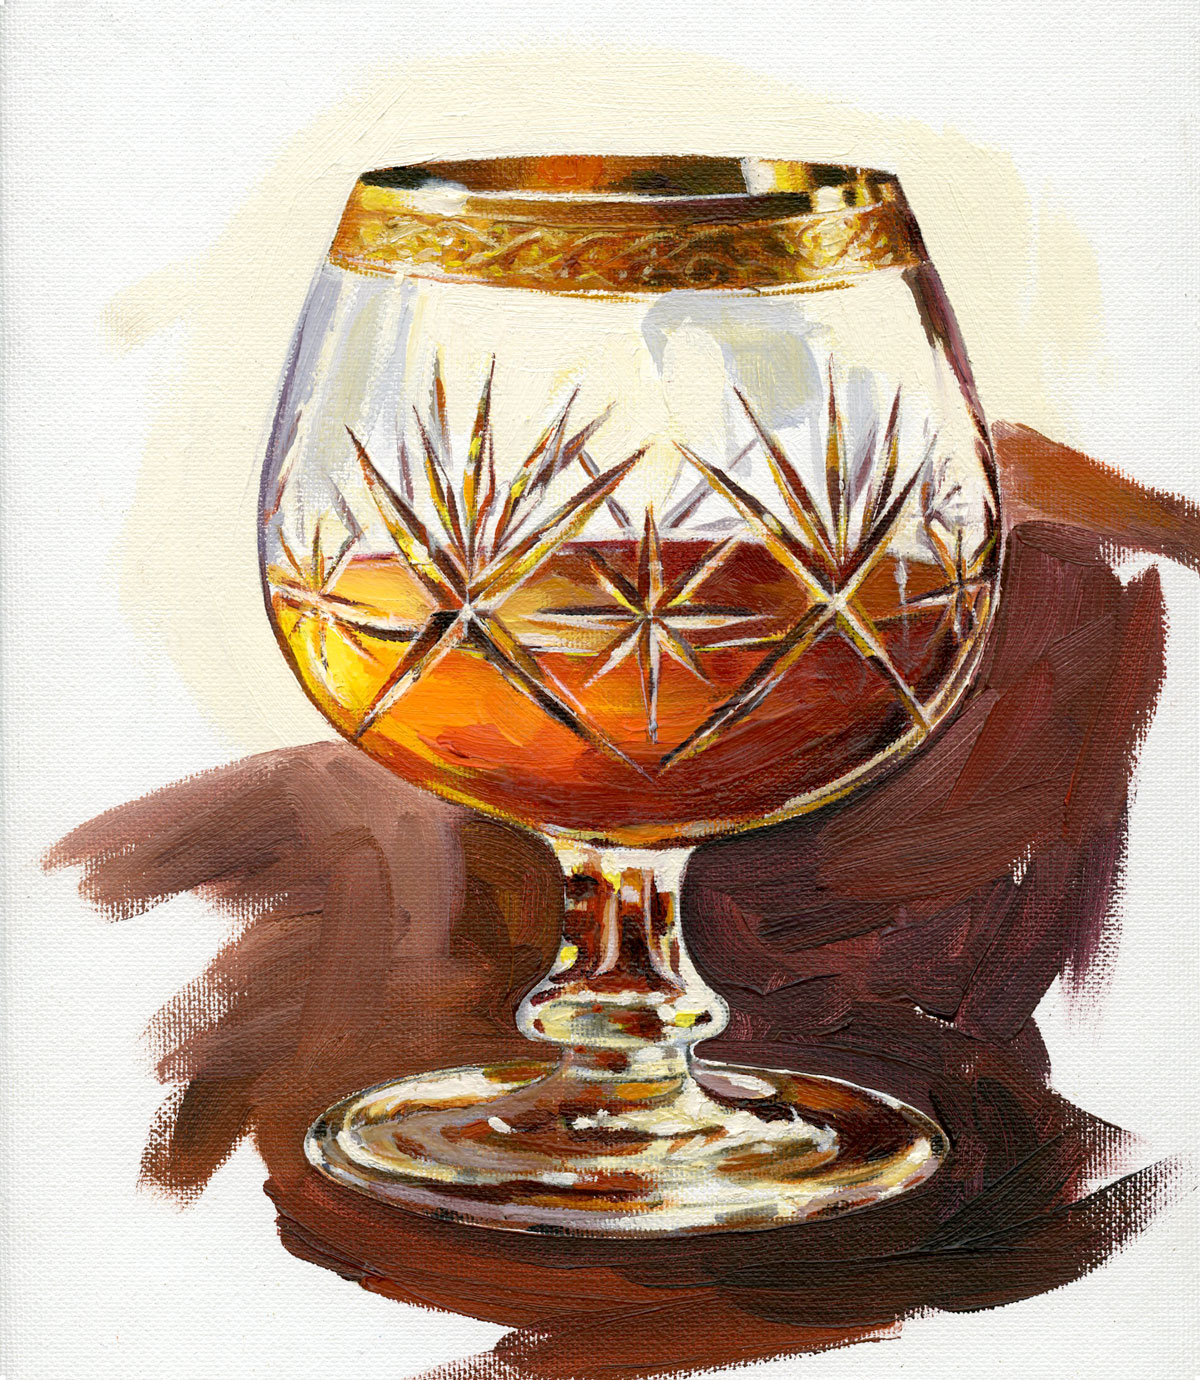  Brandy glass.   Acrylic on Canvas.   